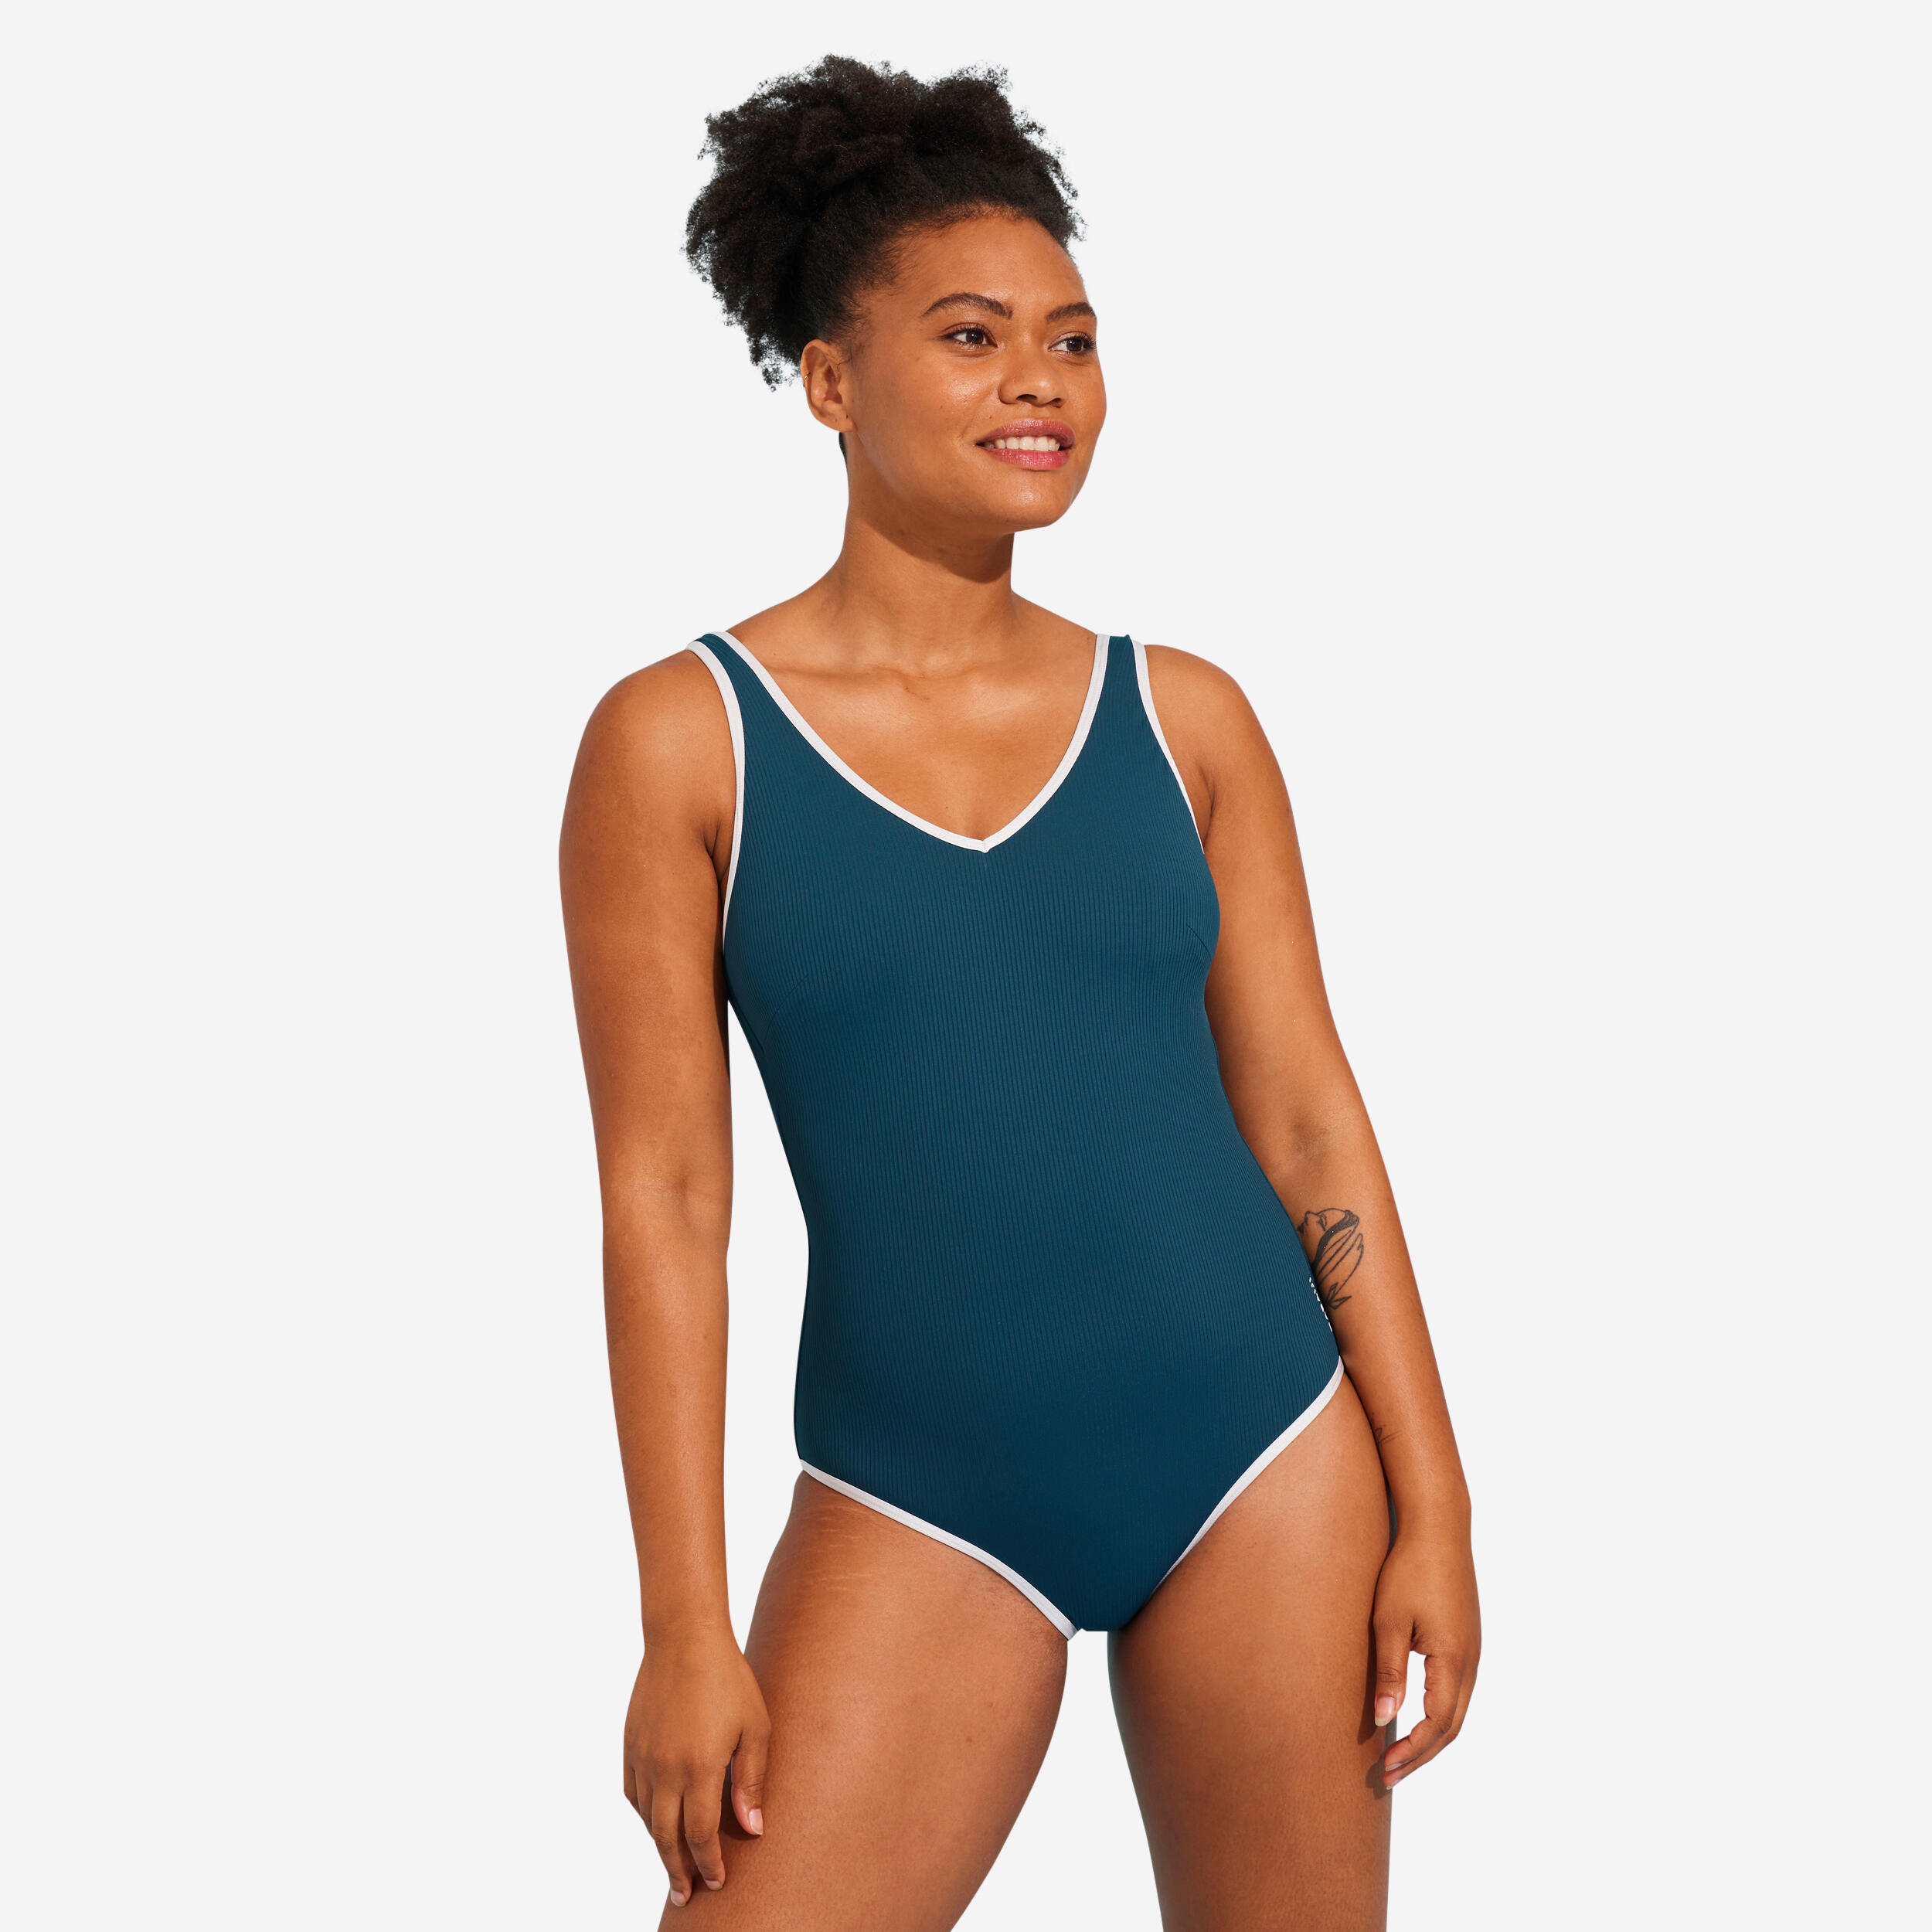 Women's aquafitness one-piece swimsuit Ines blue white 1/12